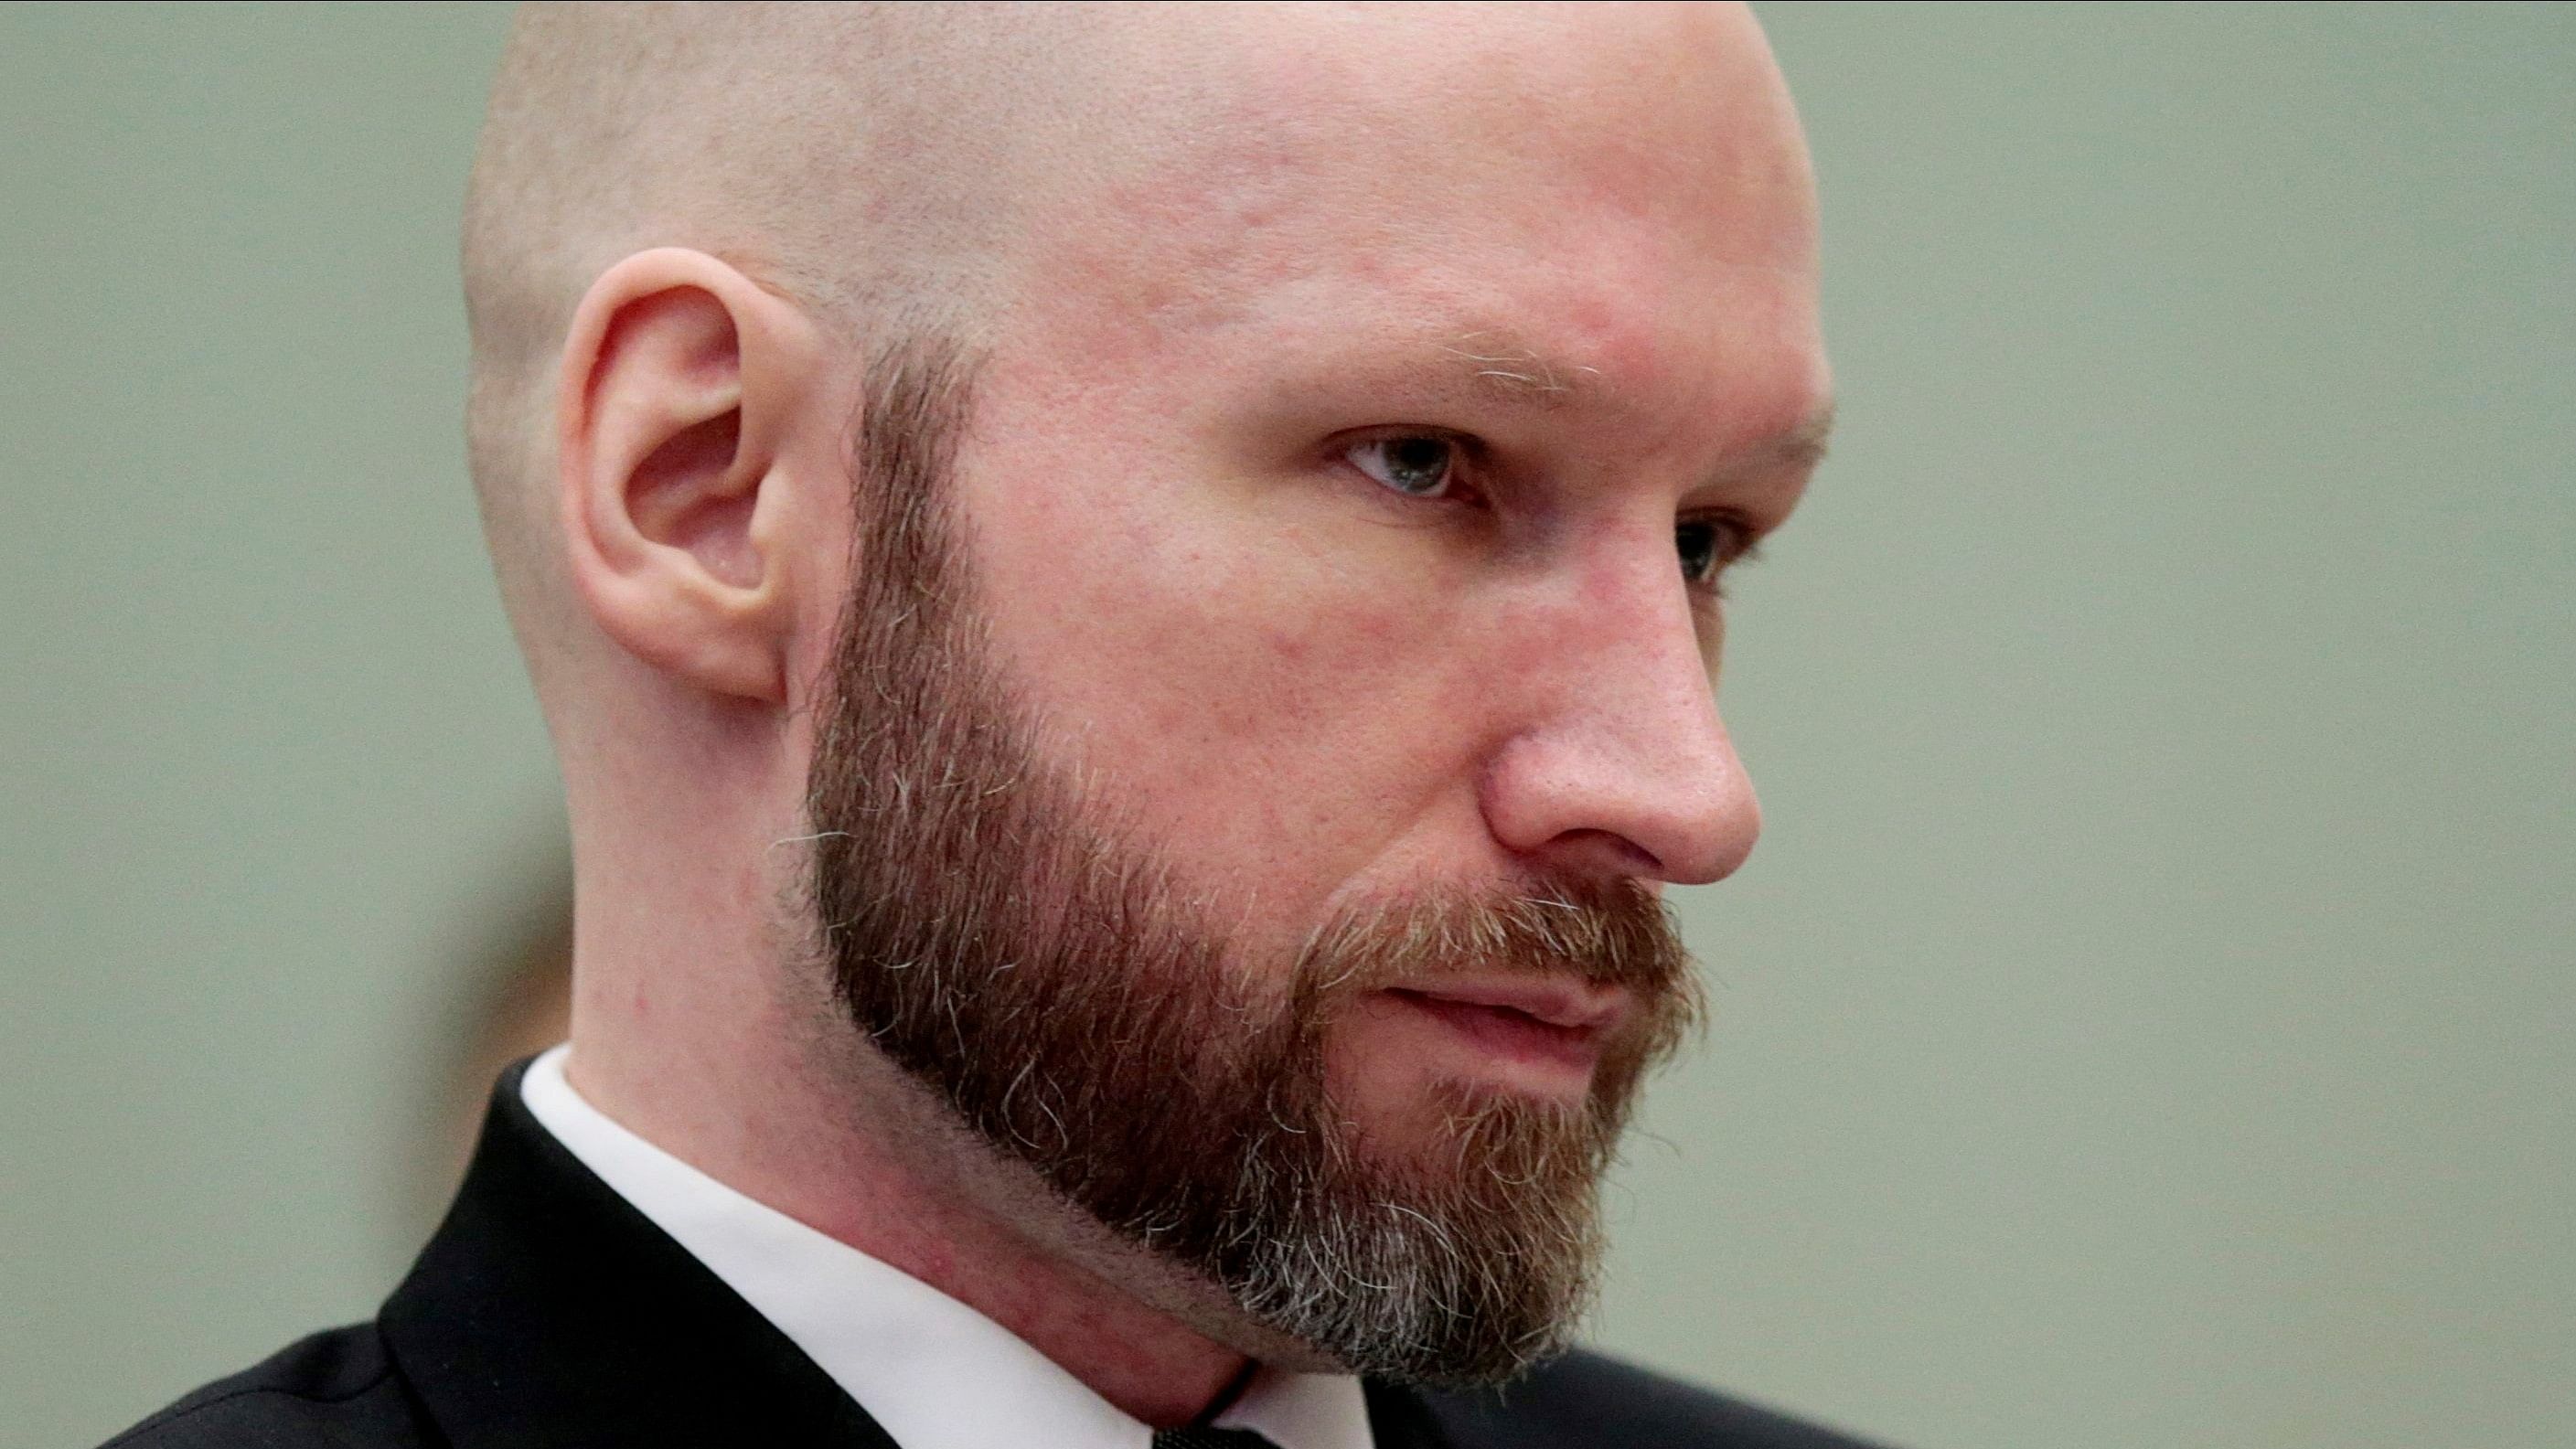 <div class="paragraphs"><p> Anders Behring Breivik.</p></div>